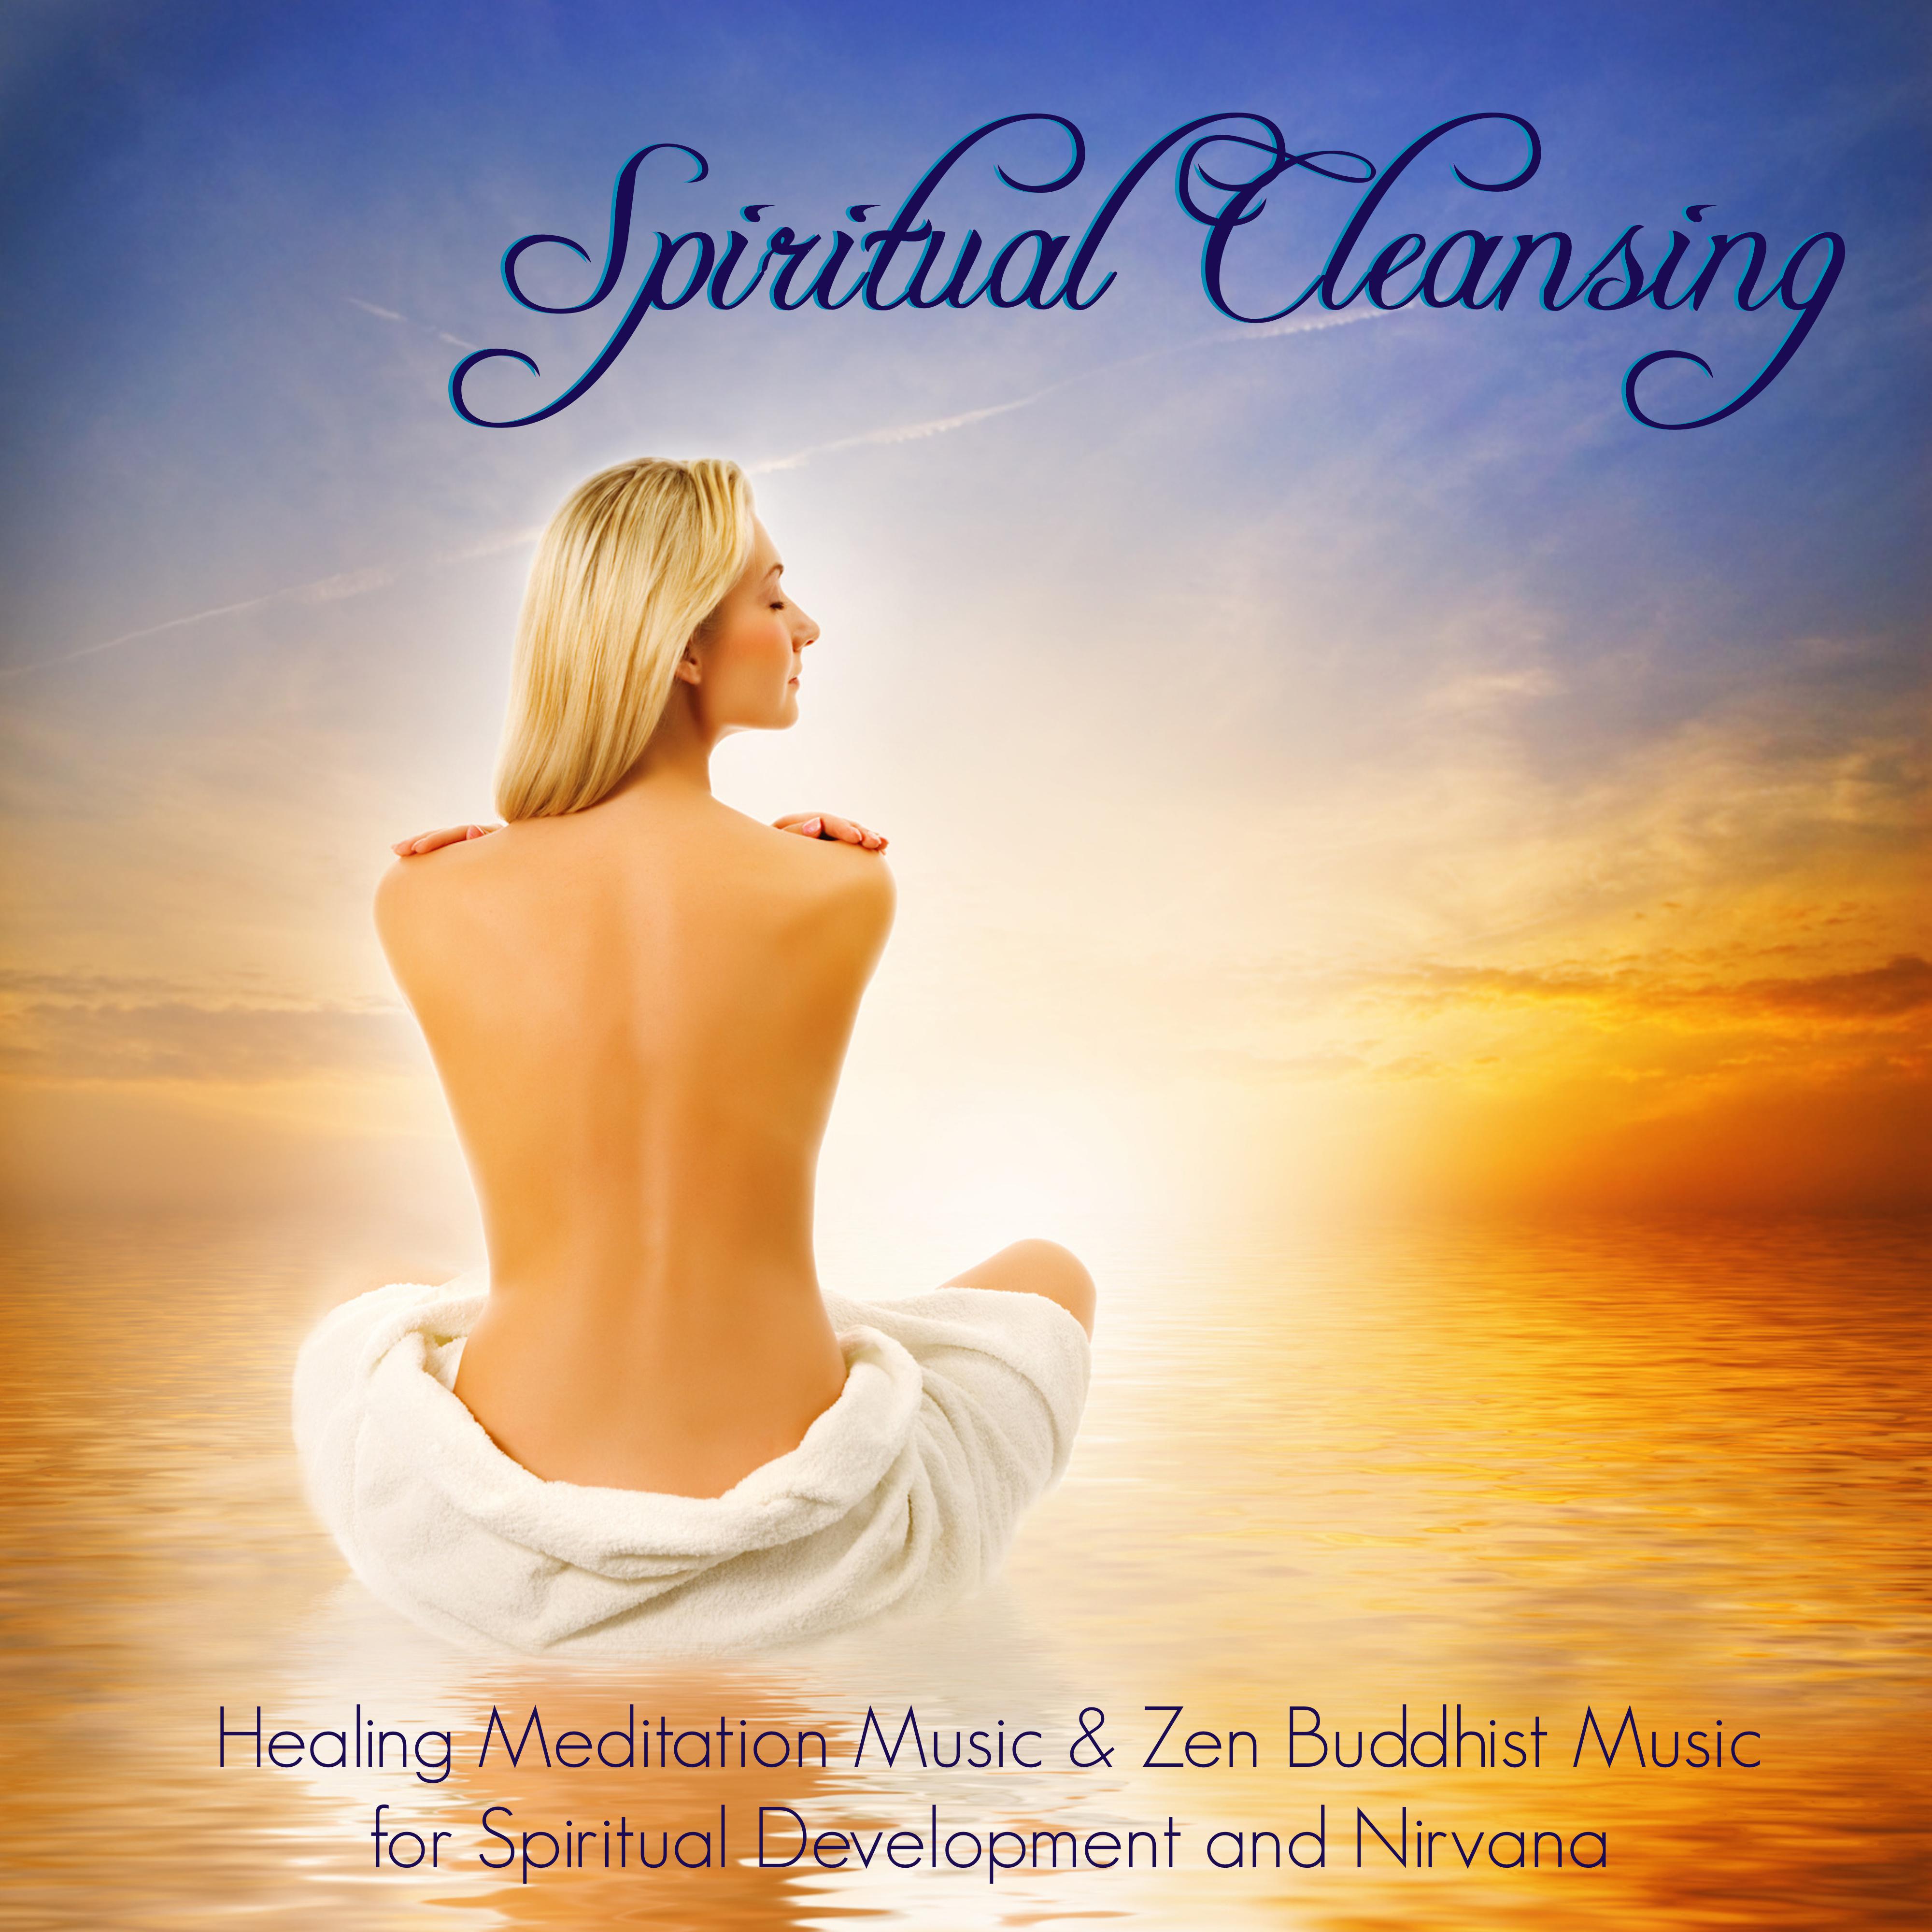 Spiritual Cleansing - Healing Meditation Music & Zen Buddhist Music for Spiritual Development and Nirvana